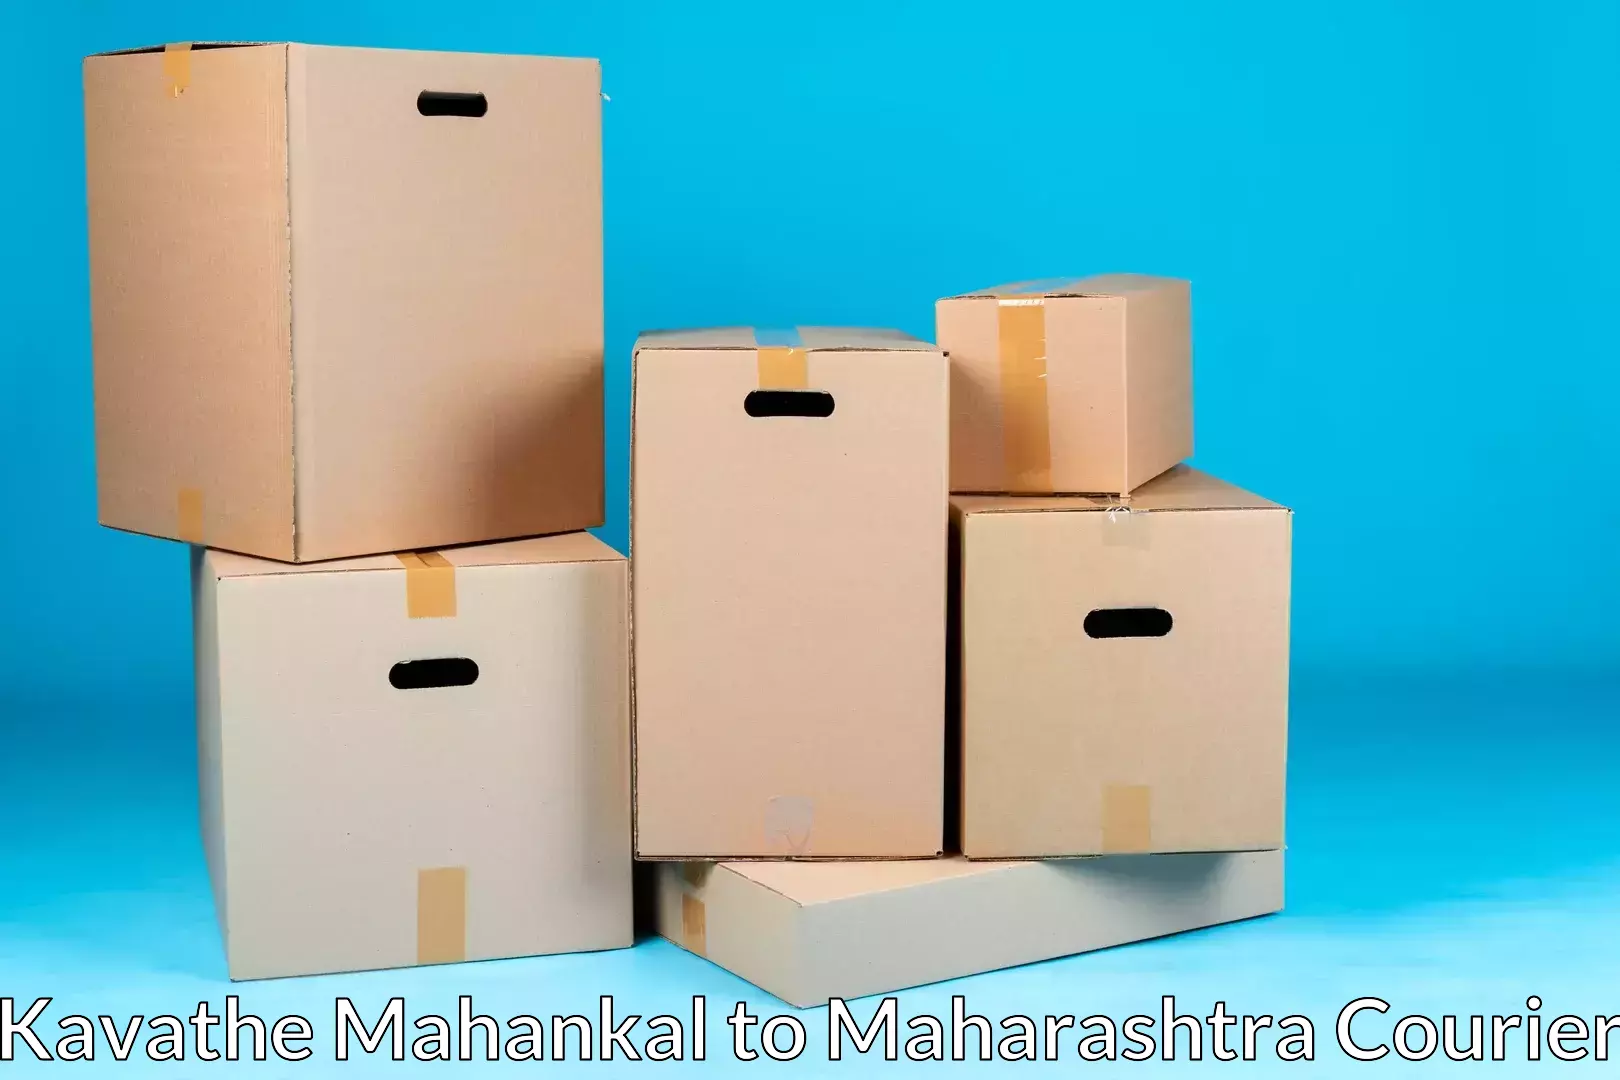 Trusted household movers in Kavathe Mahankal to Maharashtra